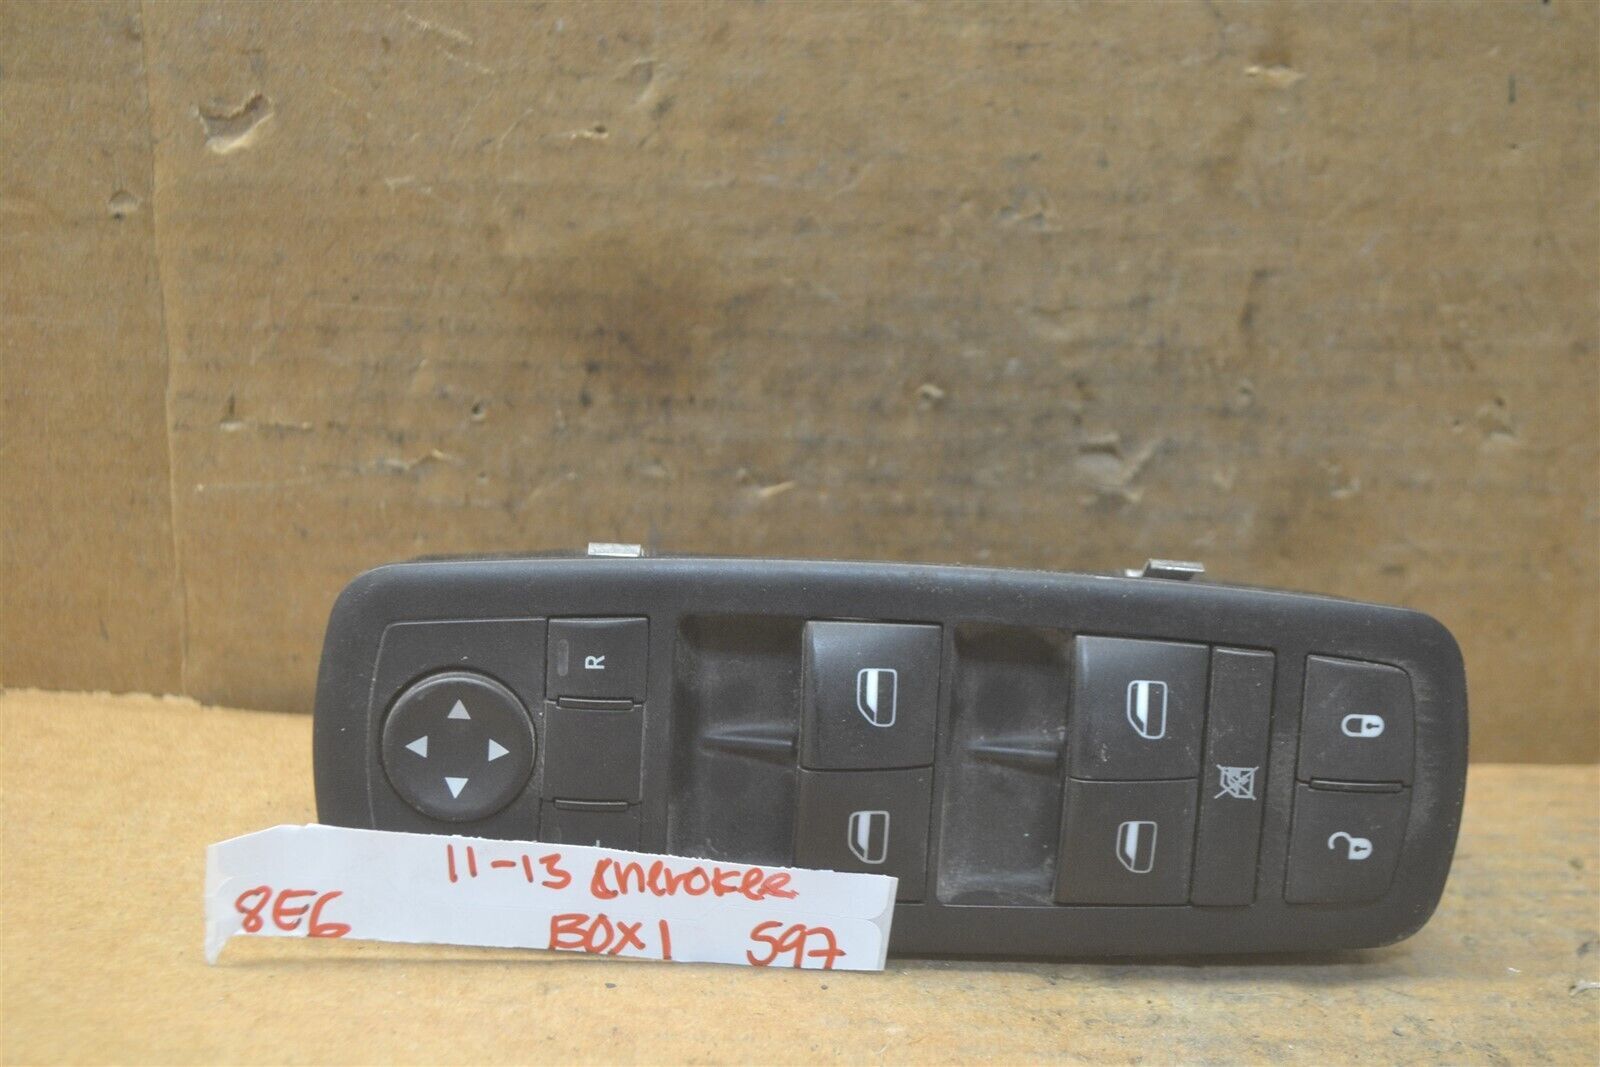 11-13 Jeep Grand Cherokee Master Switch OEM Window 68030823AB Lock 597-8e6 bx1 - $24.99